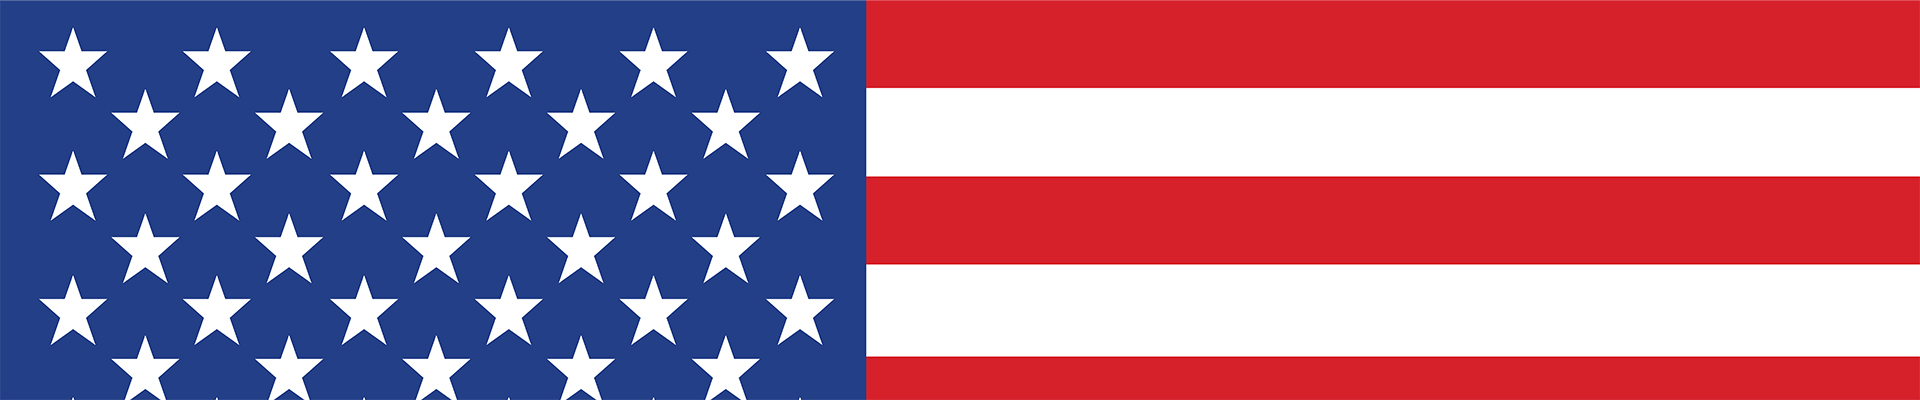 Team USA vs. ROC live stream — US flag